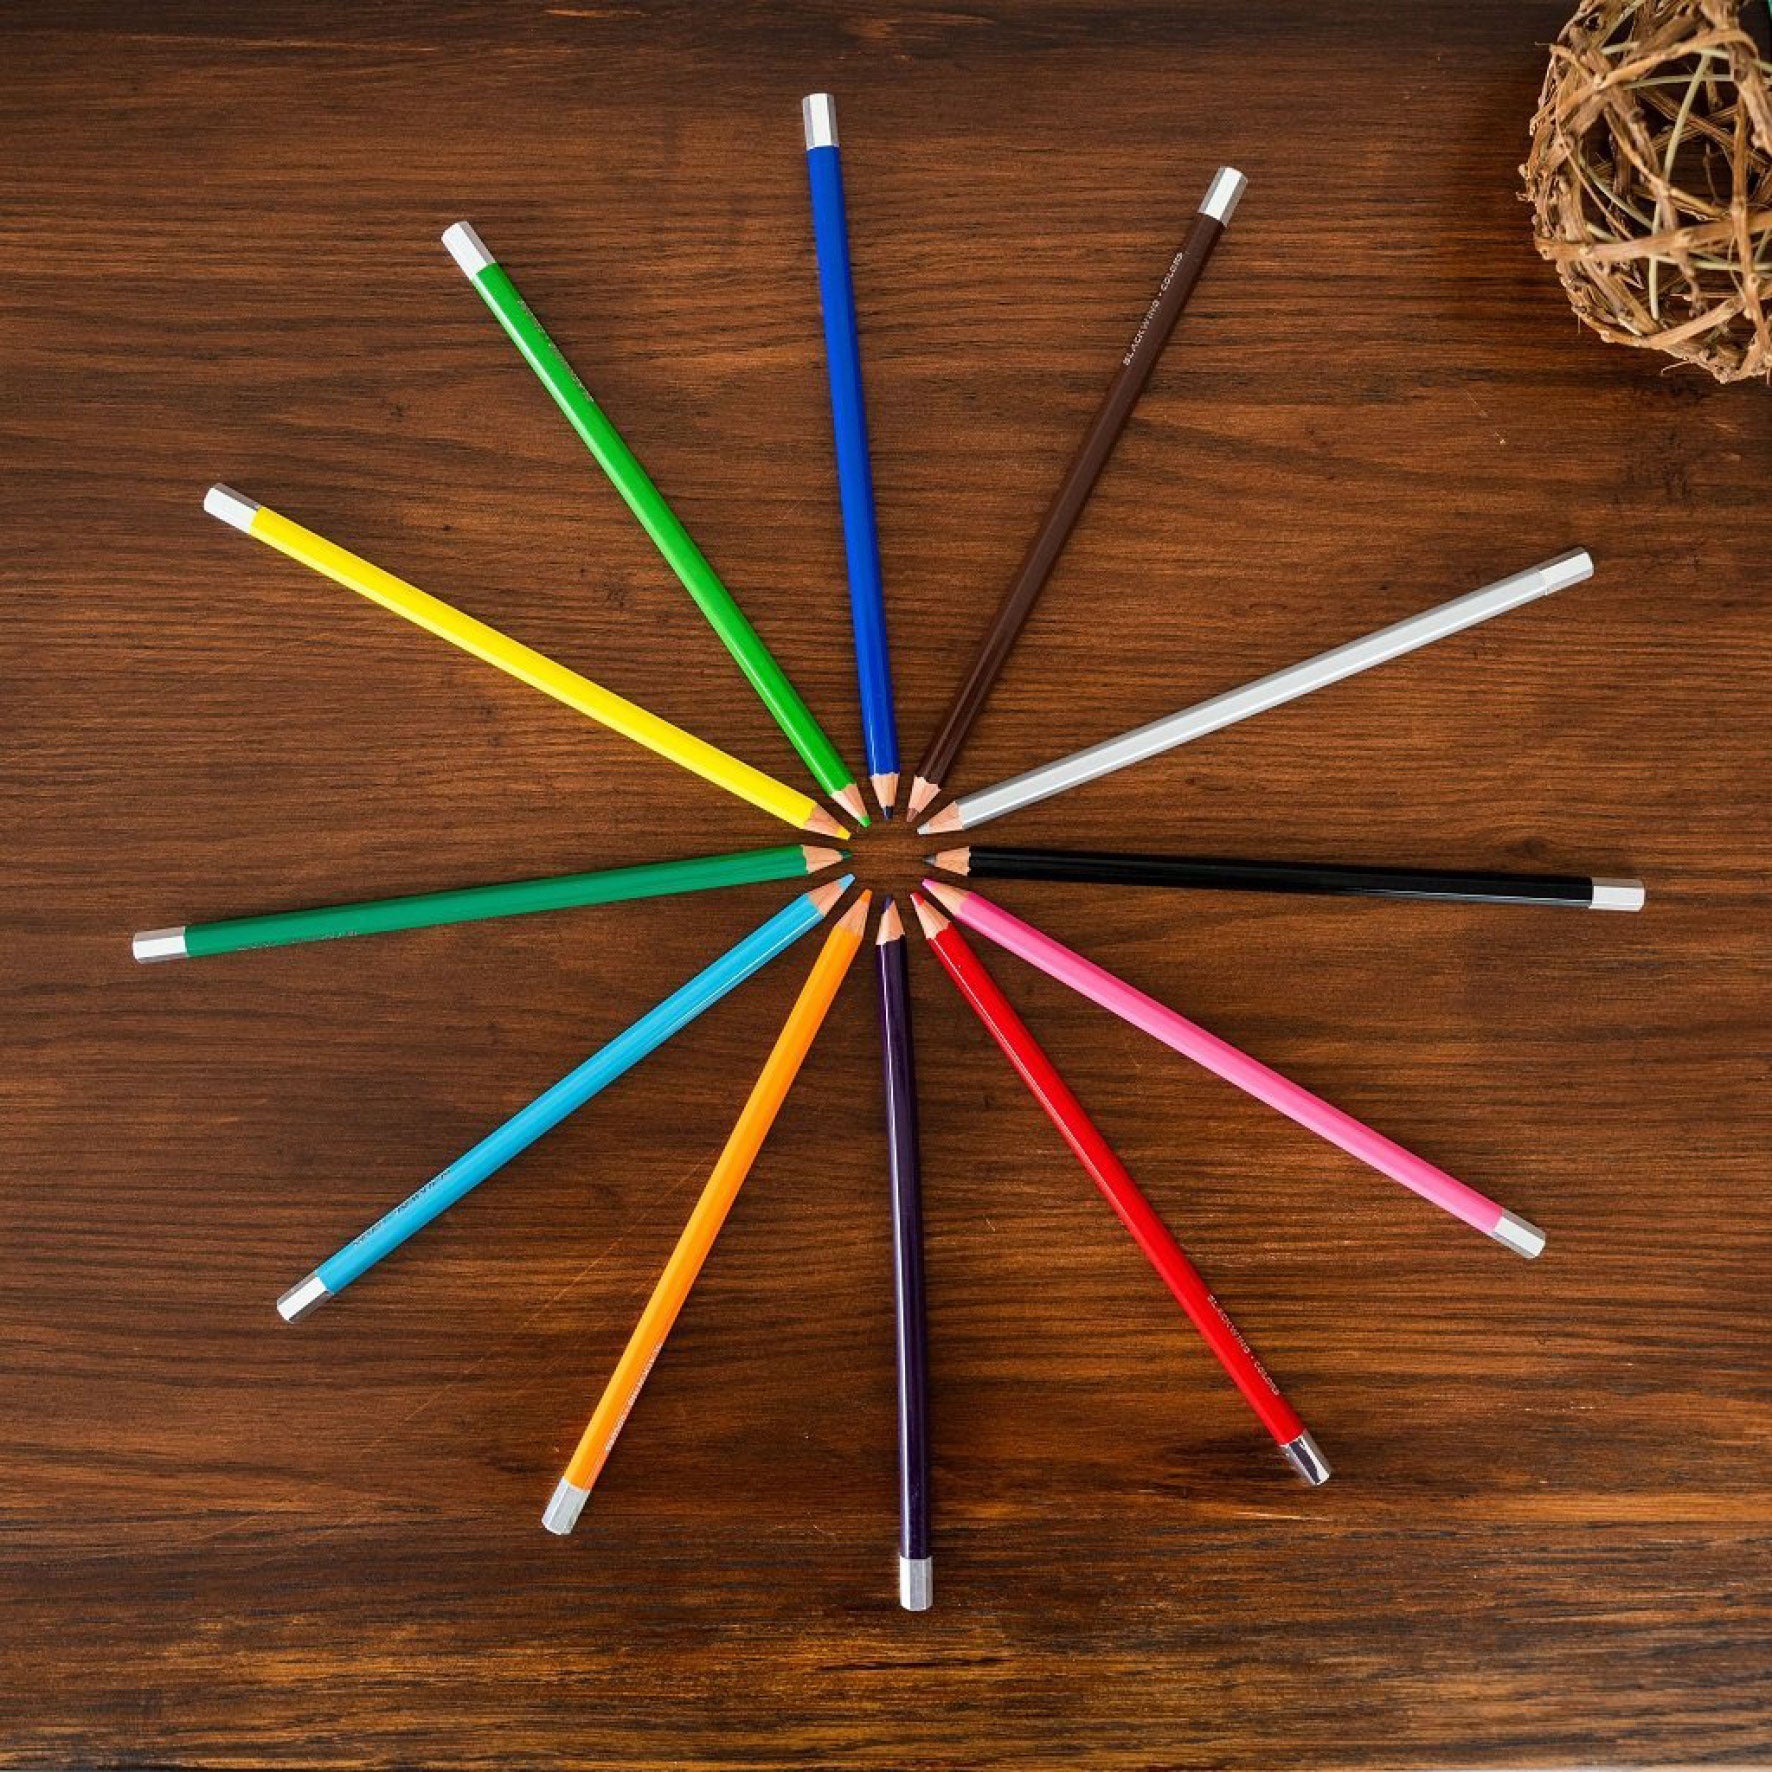 Palomino Blackwing - Coloured Pencils - Set of 12